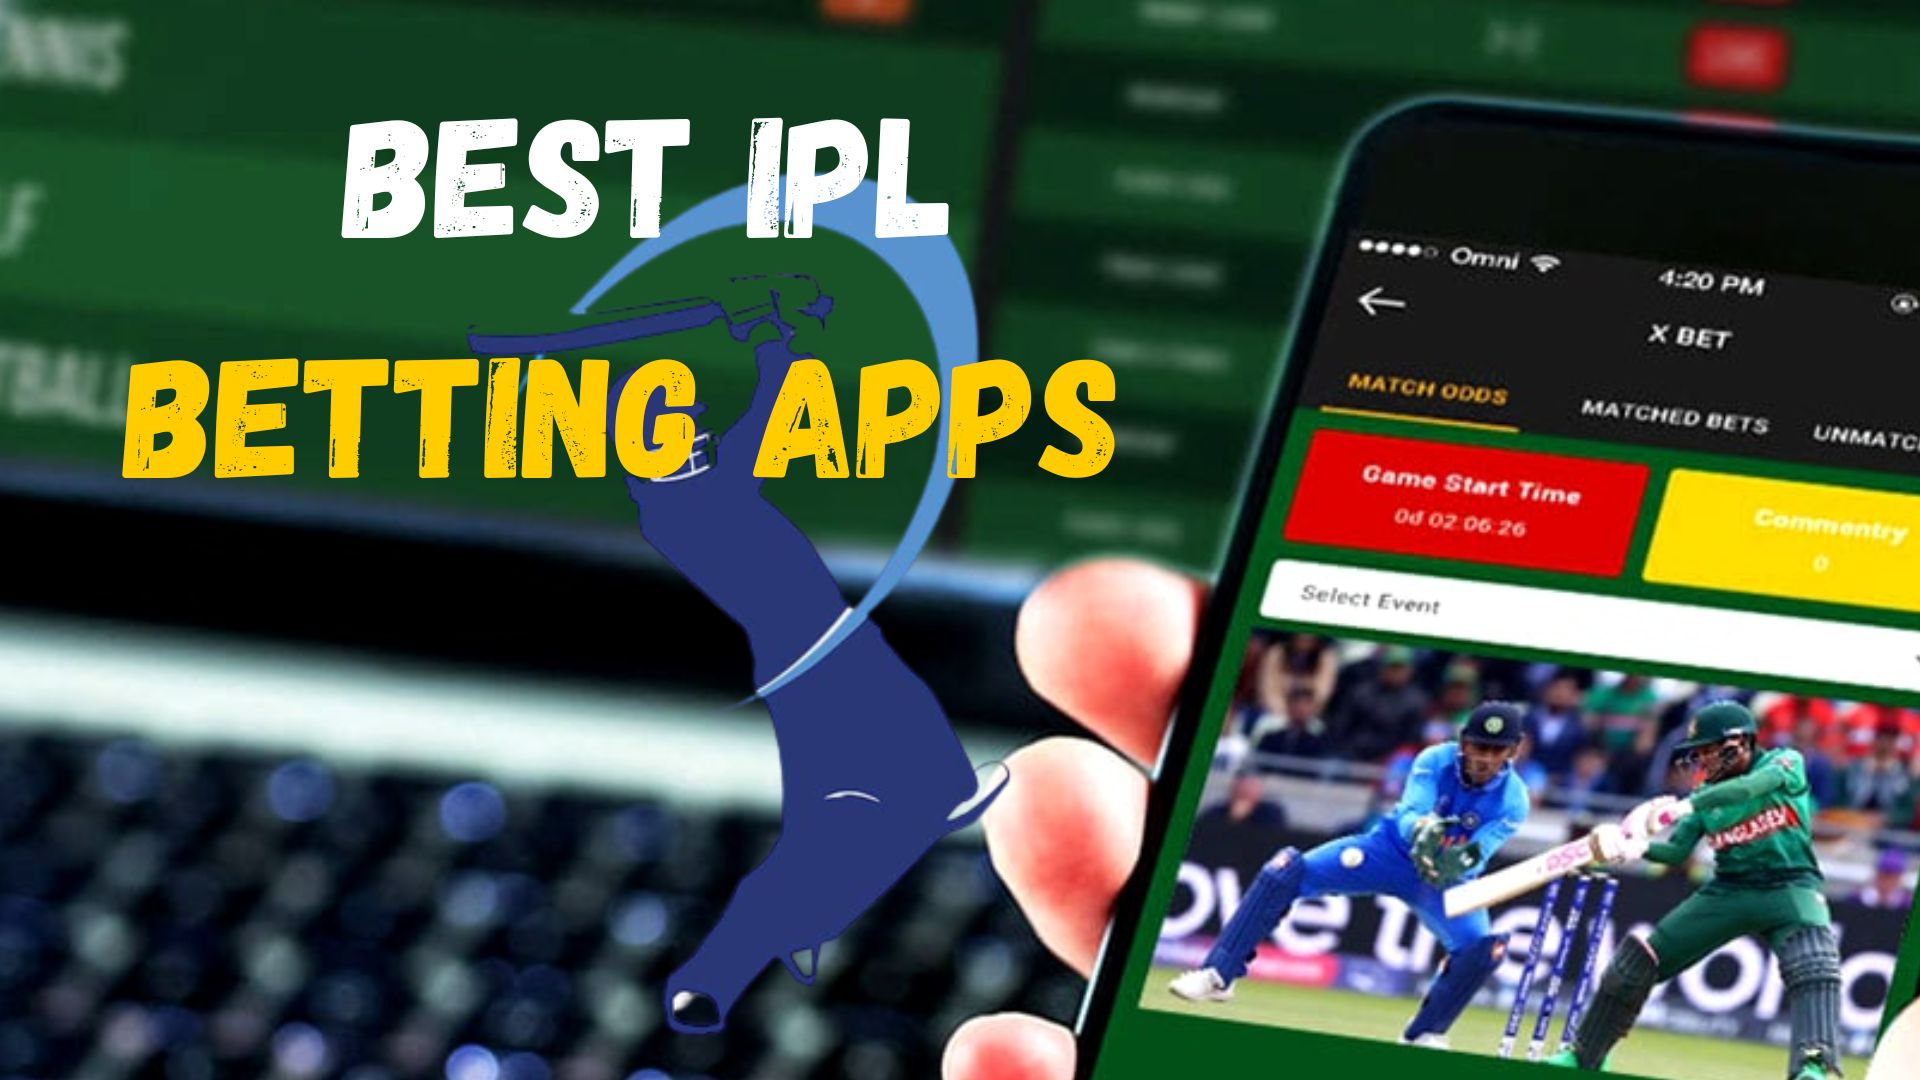 Best IPL Betting Apps